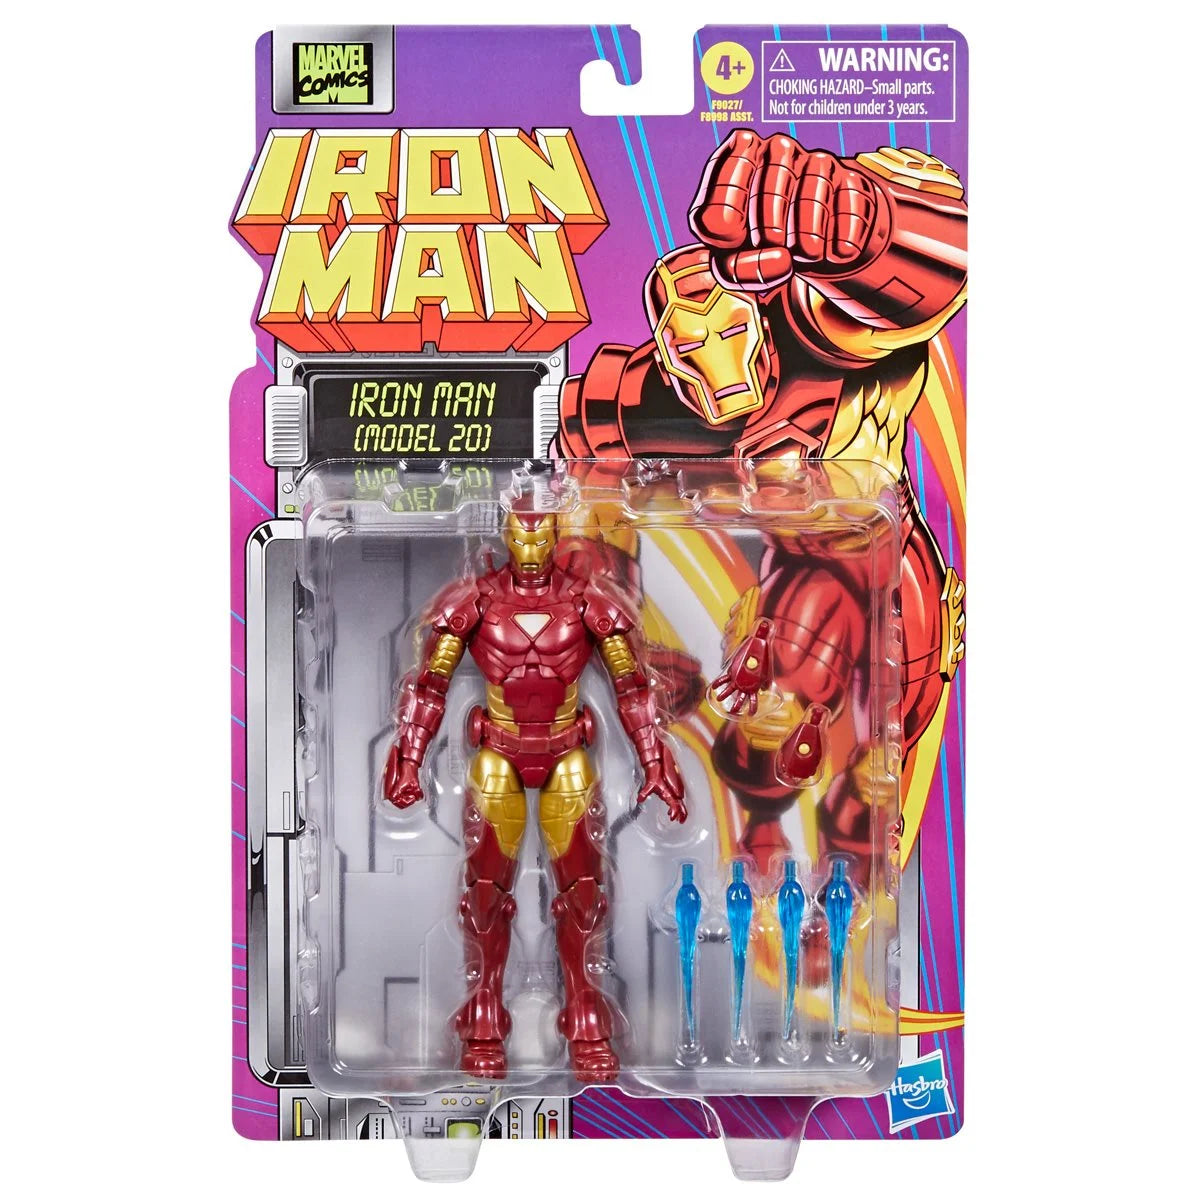 (PREVENTA) Iron Man Marvel Legends 6-Inch Action Figures Wave 1 Case of 6